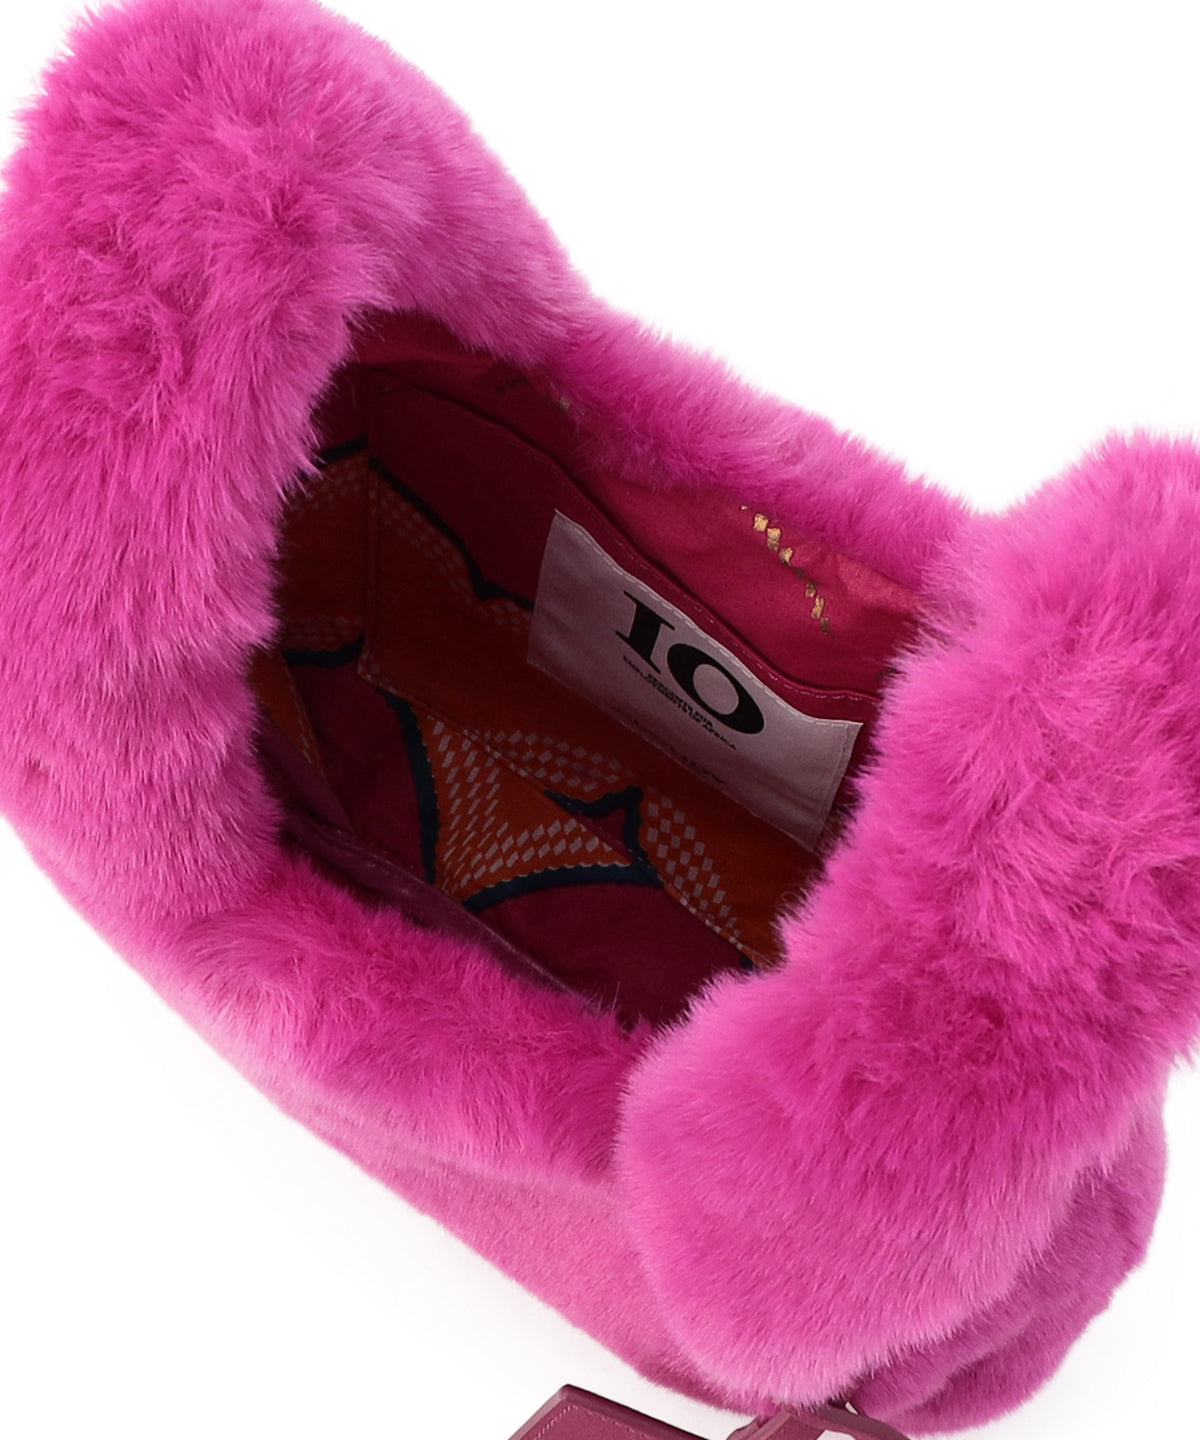 Eco Fur Convenience Bag (Small) PINK